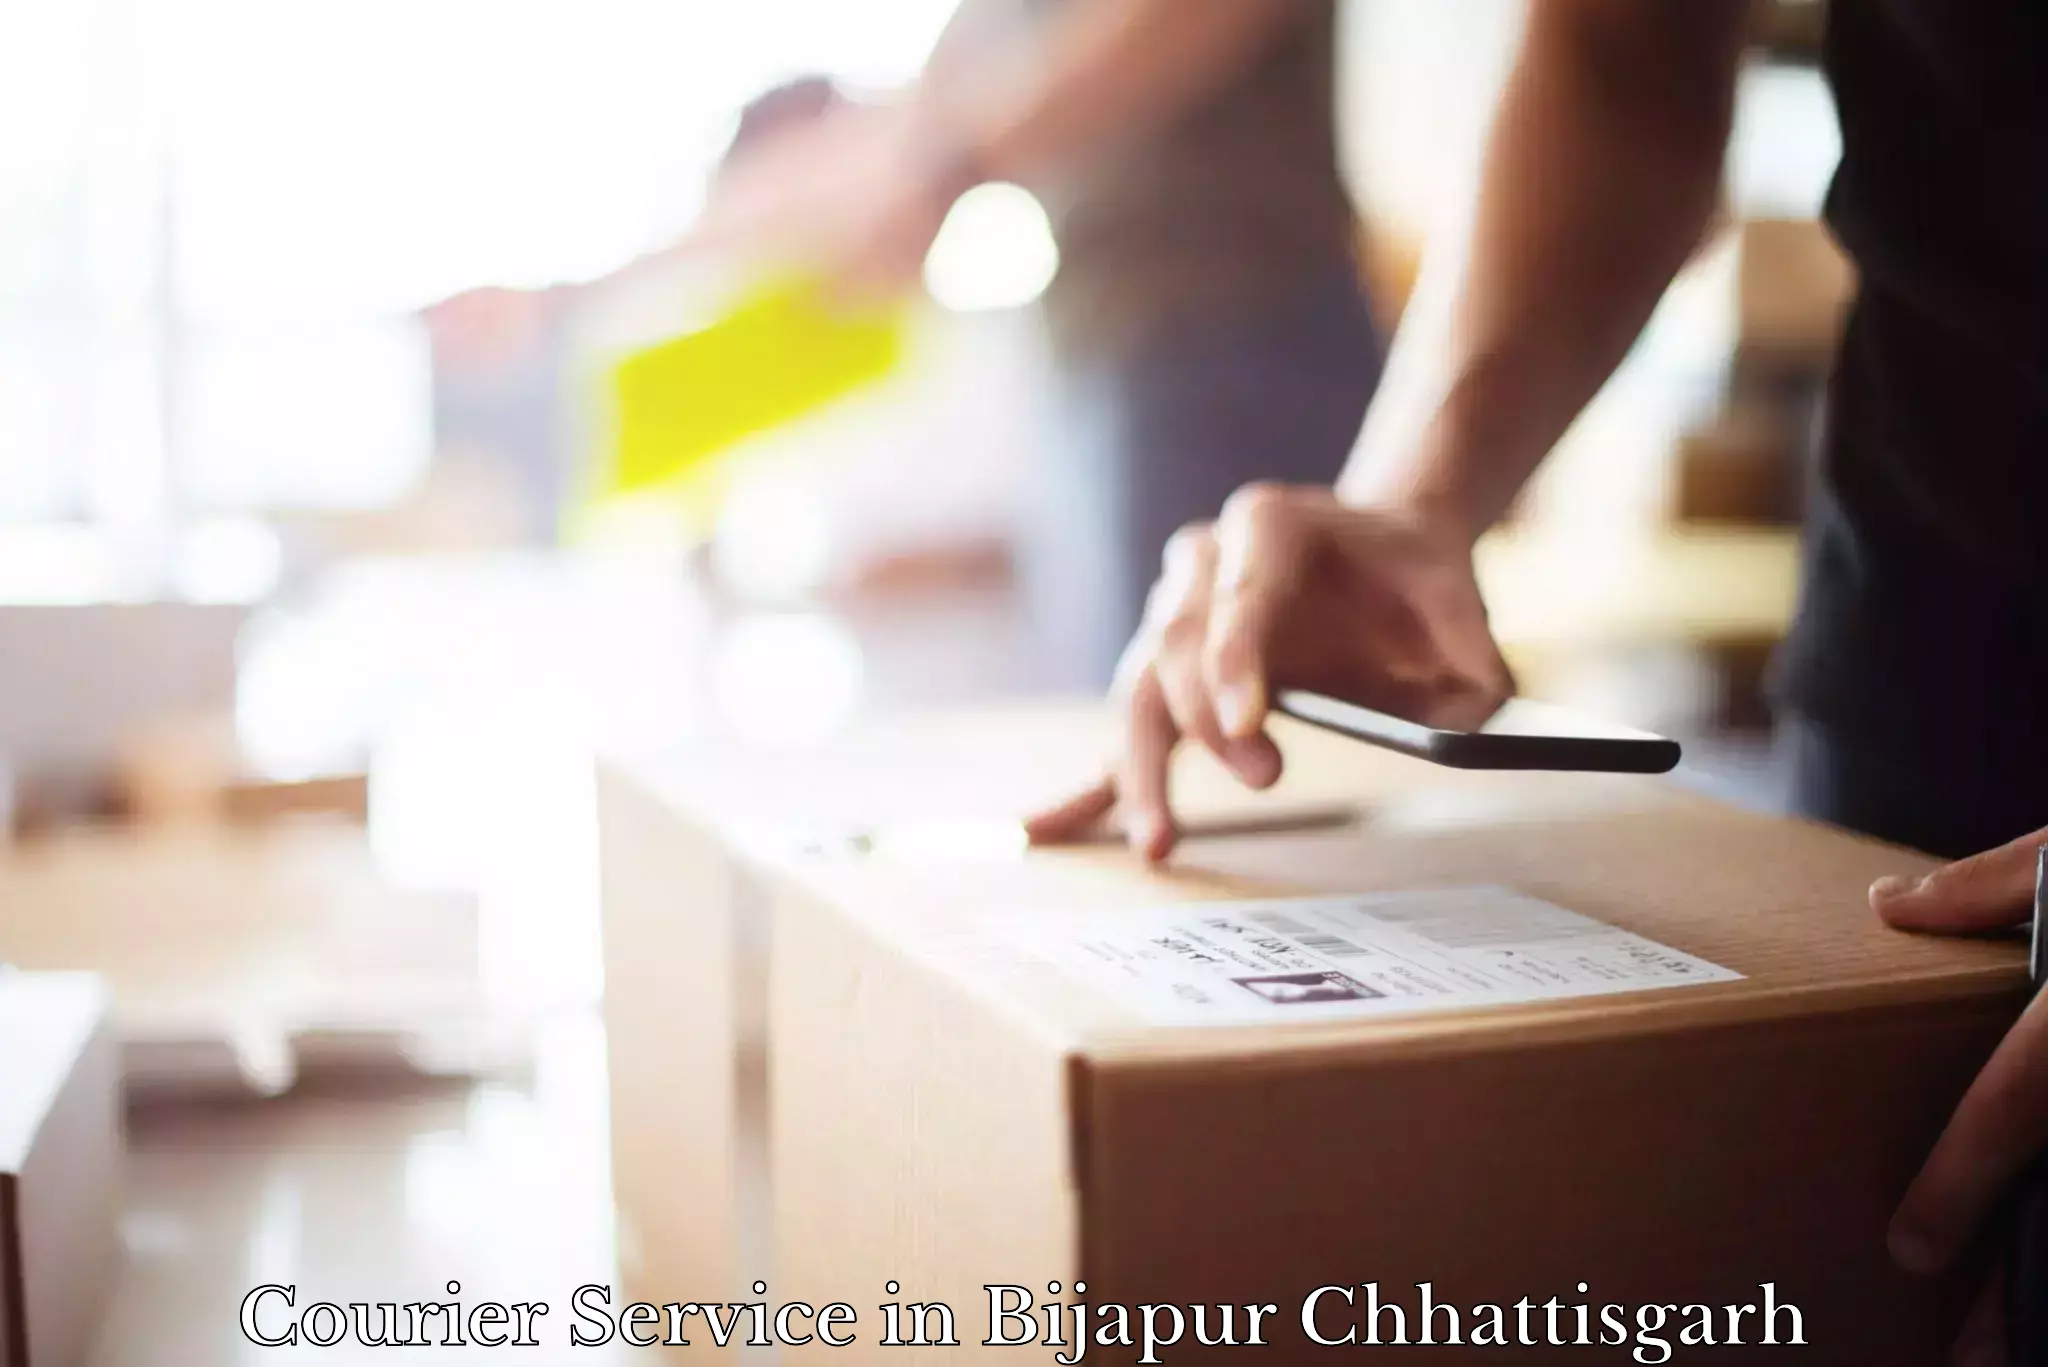 Doorstep delivery service in Bijapur Chhattisgarh